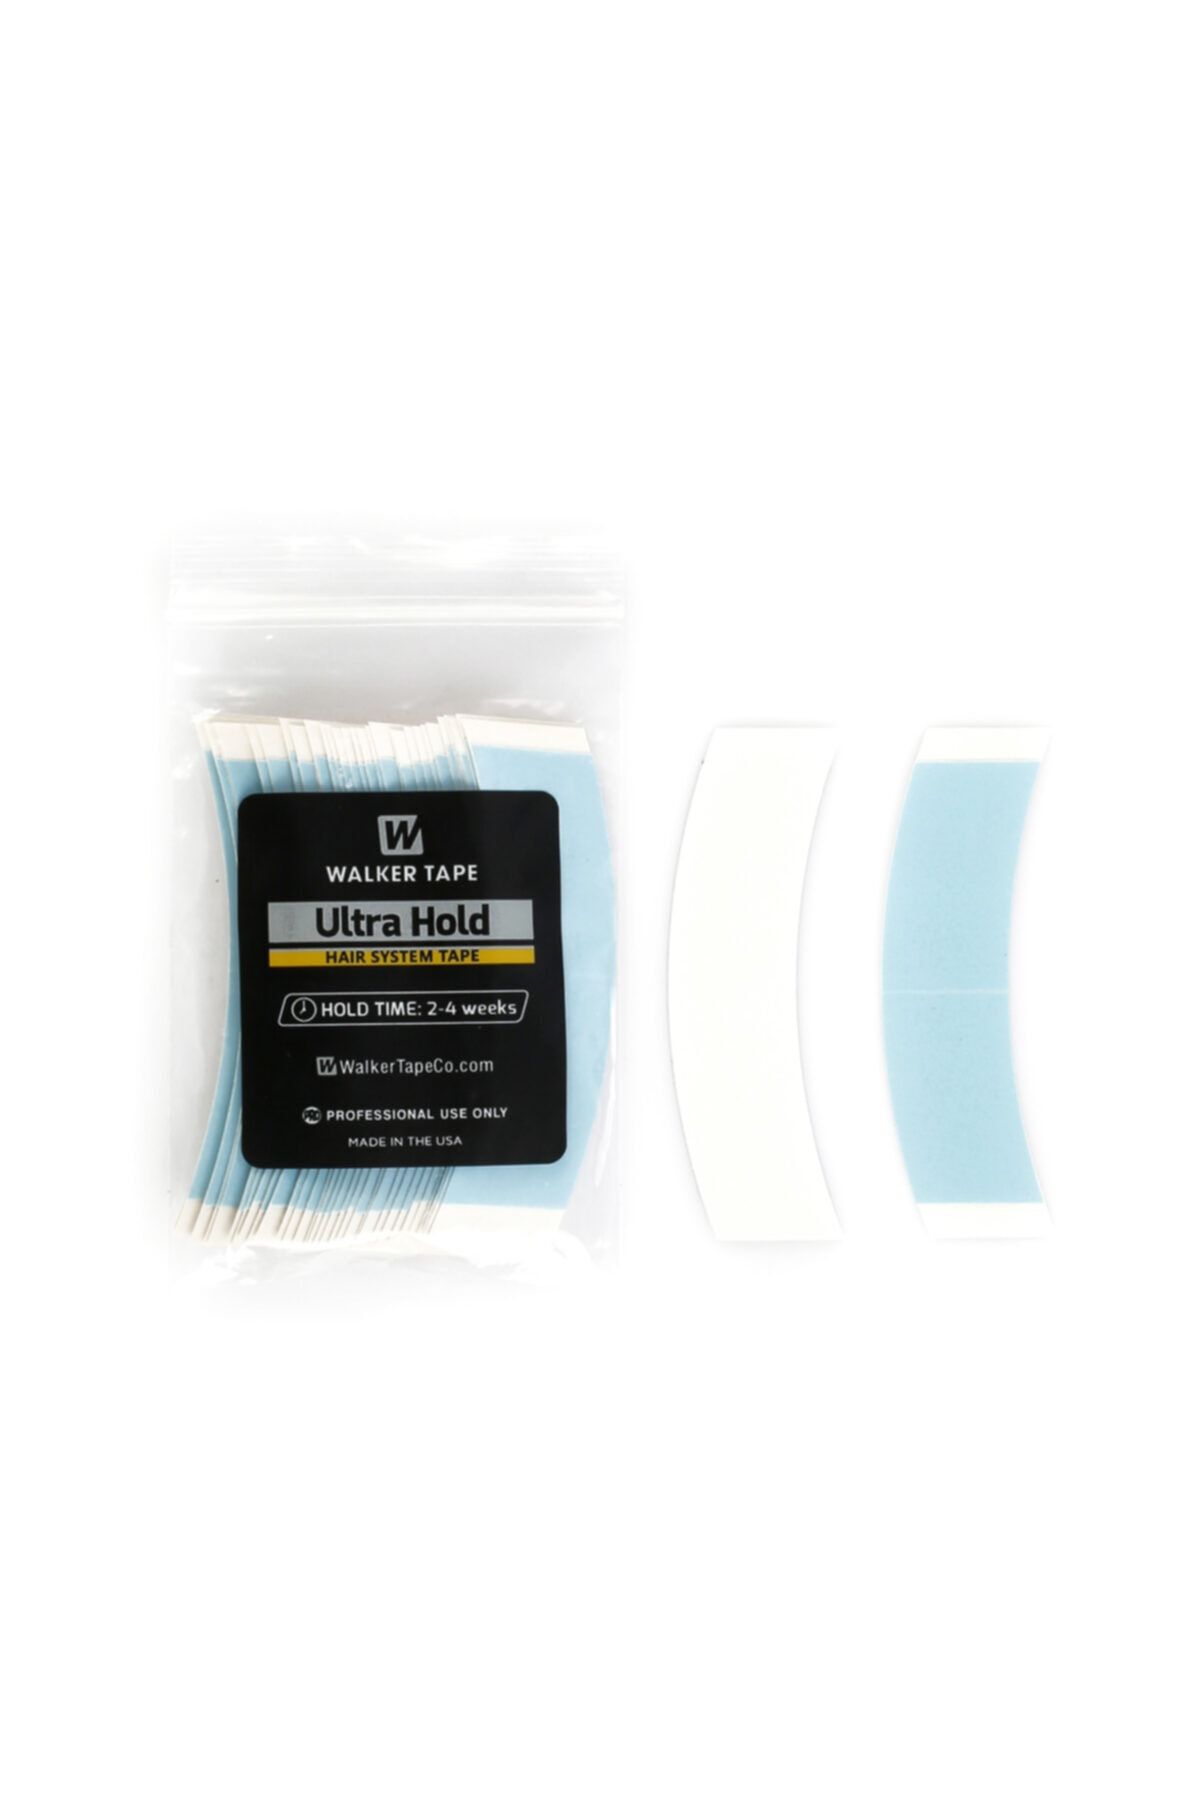 Walker Tape Protez Saç Bandı 36 Adet 2.0 7.5cm Lace Front /